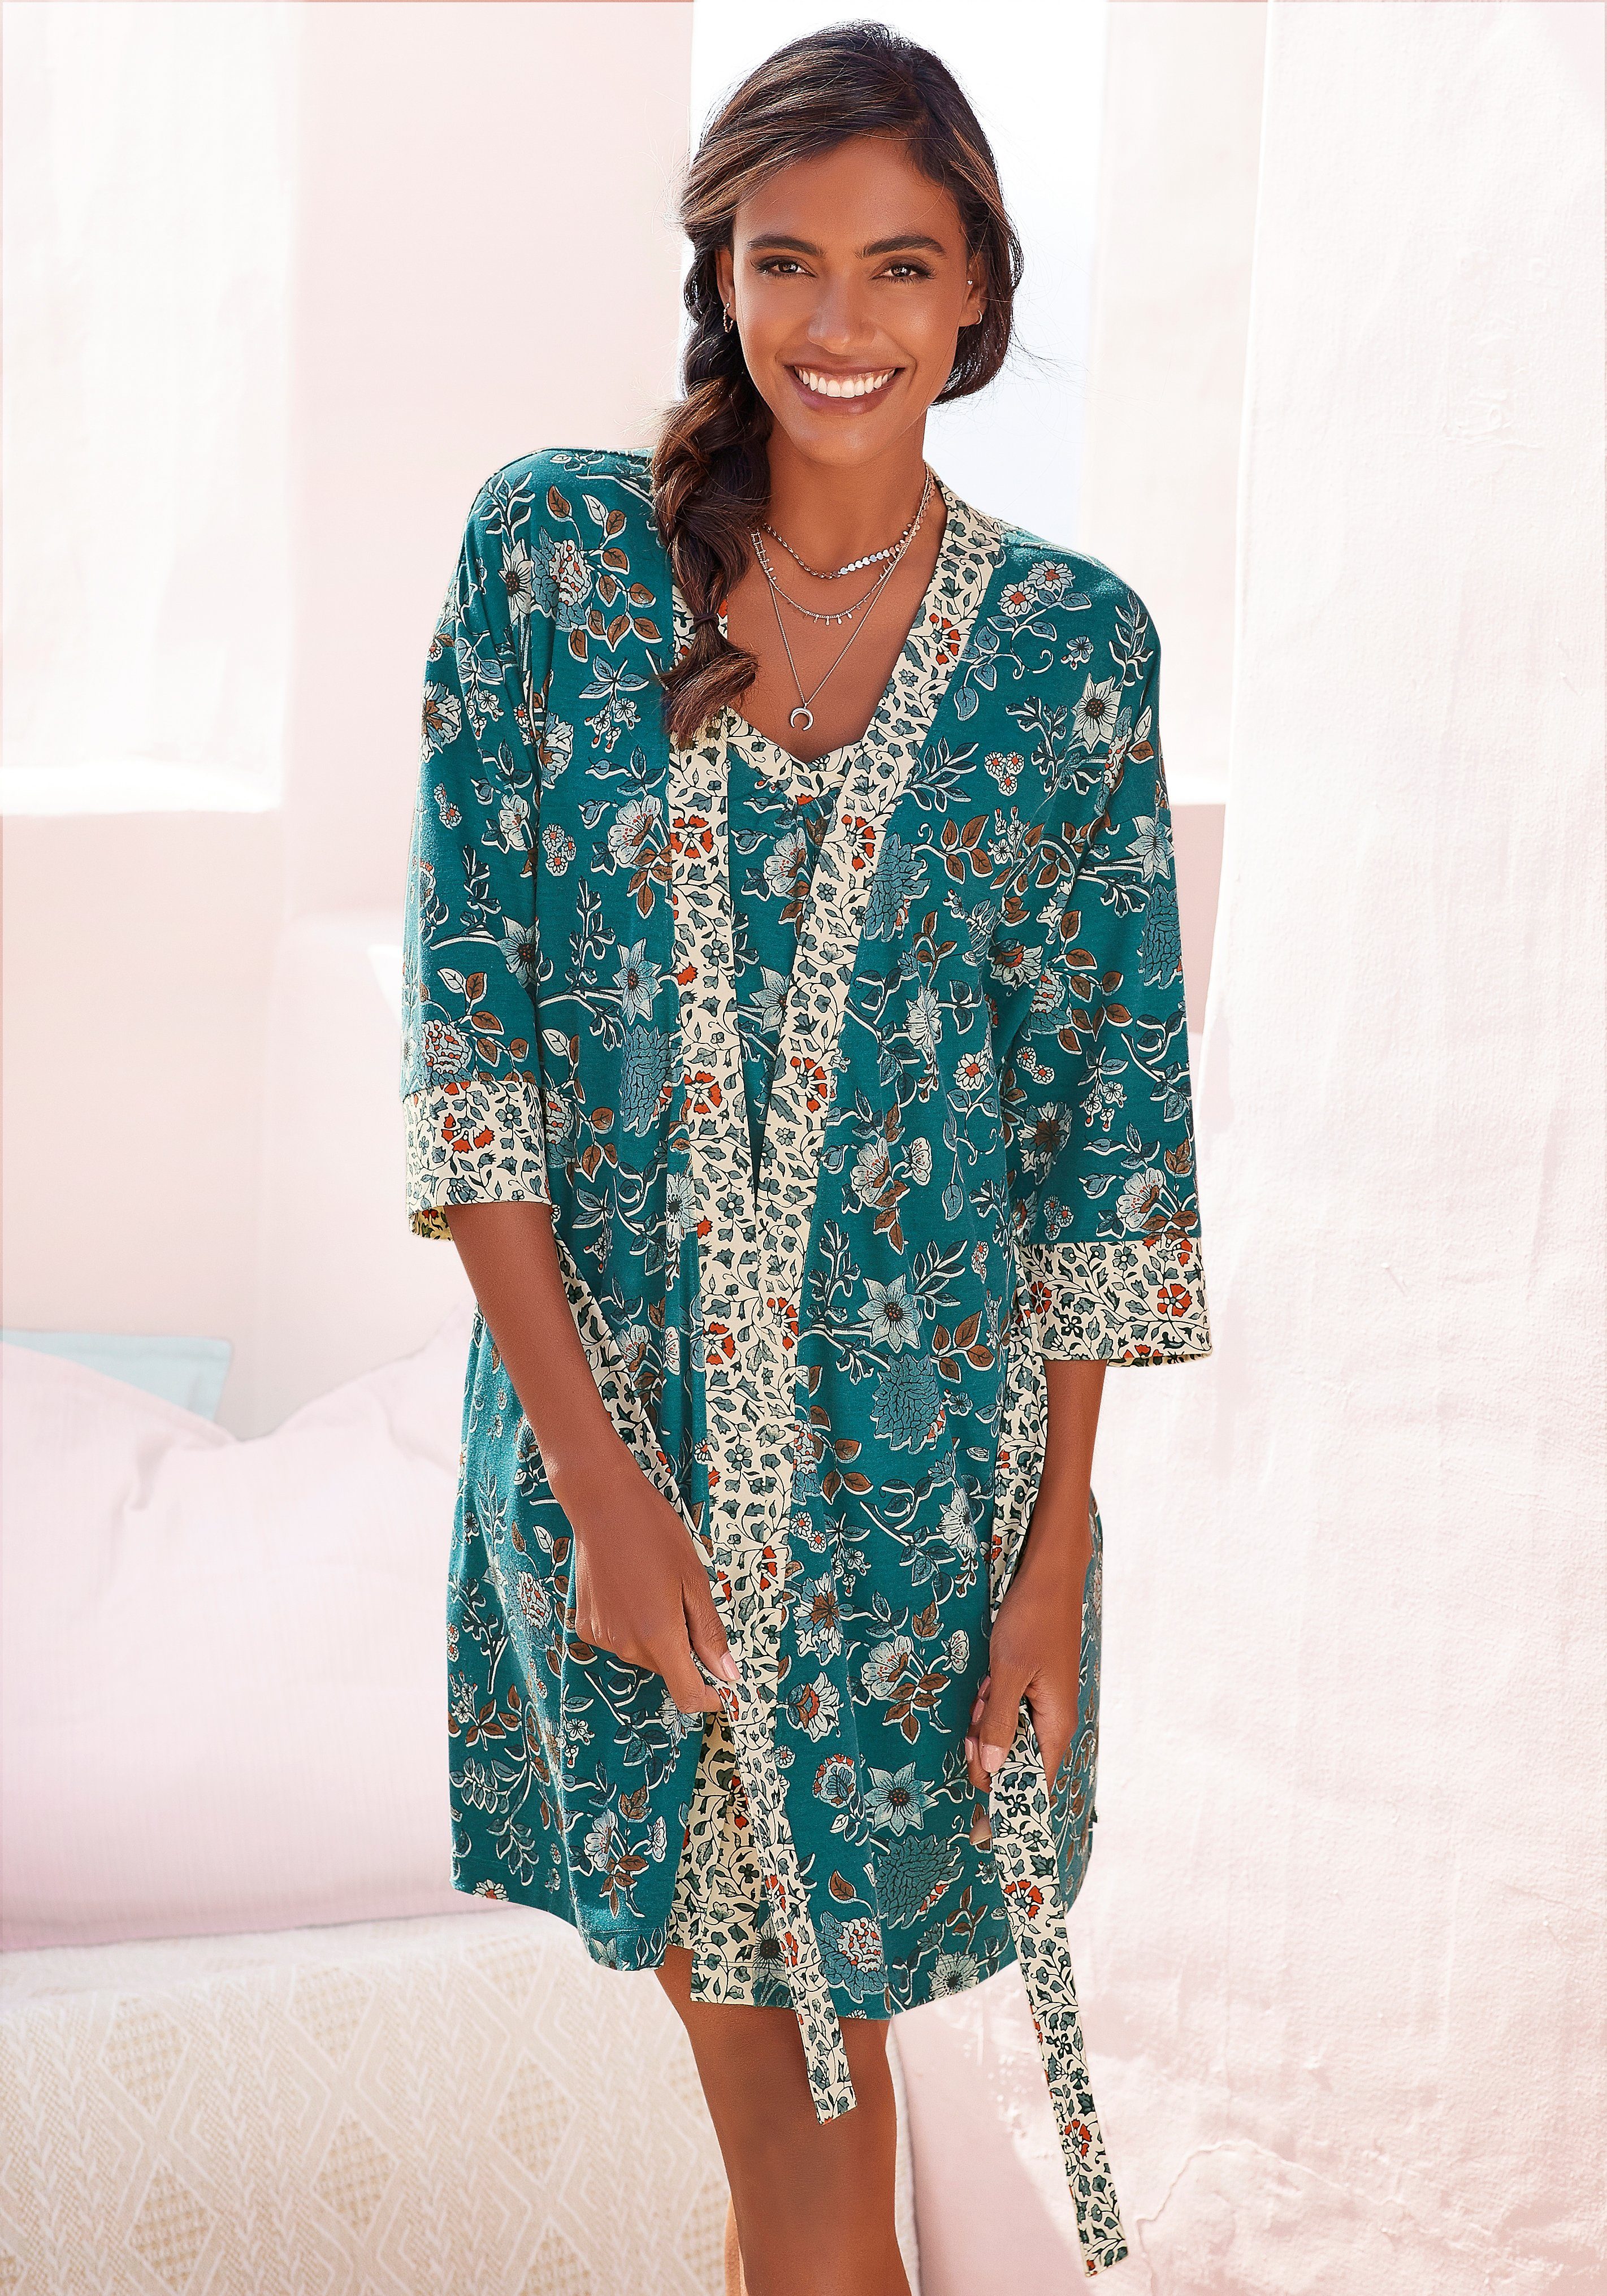 LASCANA Kimono, Kurzform, Jersey, rauchblau-ecru Blumen Kimono-Kragen, mit Allover-Druck Gürtel